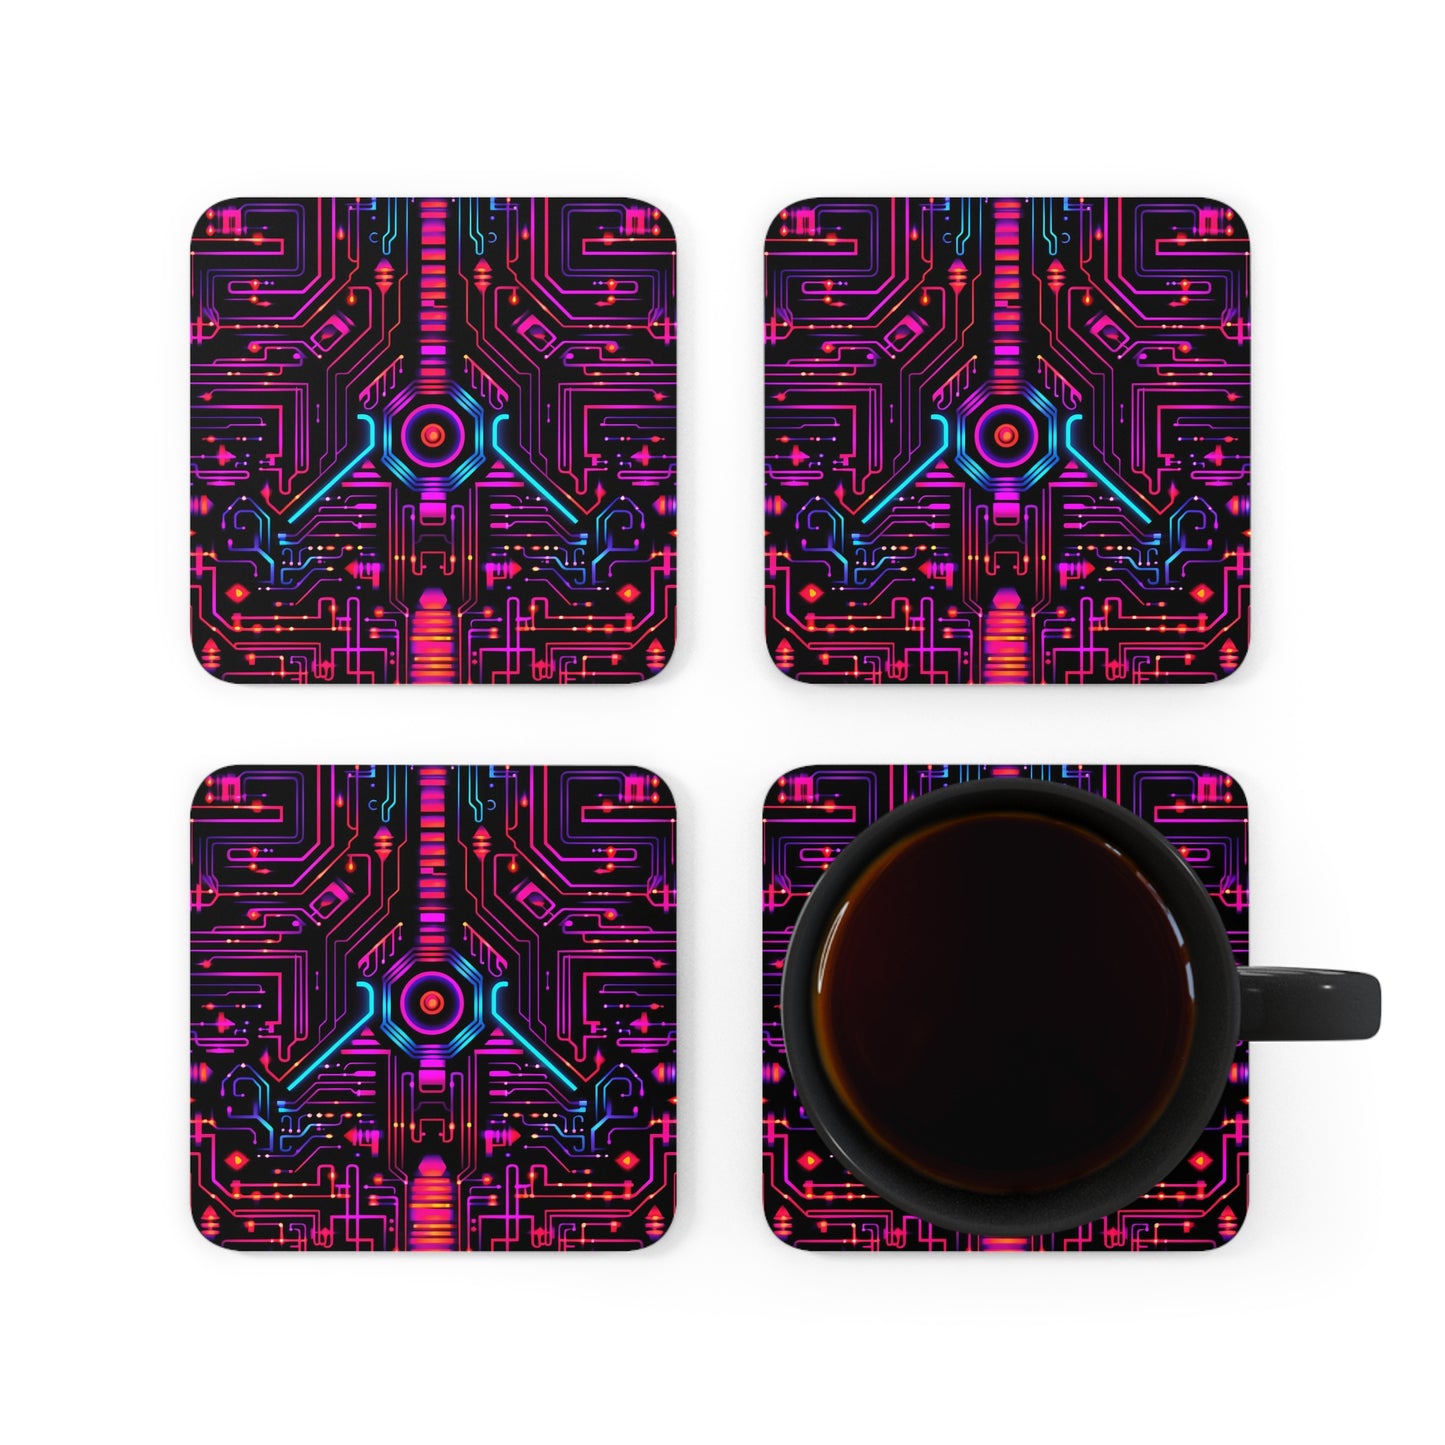 Cyberpunk Circuit Board Coaster Set of 4, Tech Coffee Table Decor, Futuristic Square Drink Coasters, MDF Top, Cork Bottom, Housewarming Gift